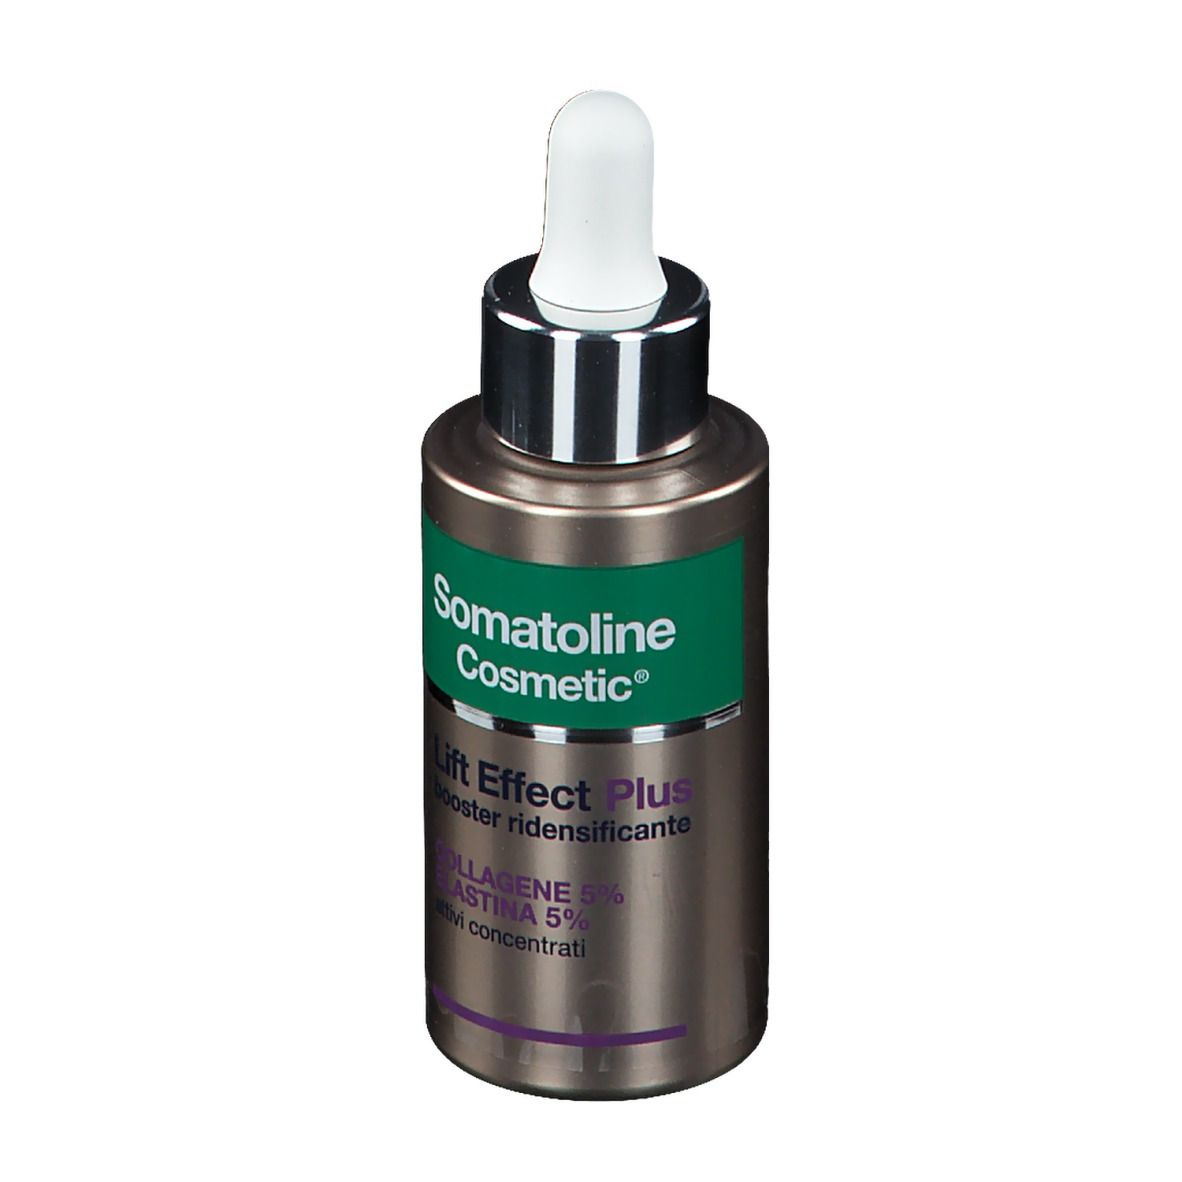 Somatoline Cosmetic® Lift Effect Plus Booster Ridensificante